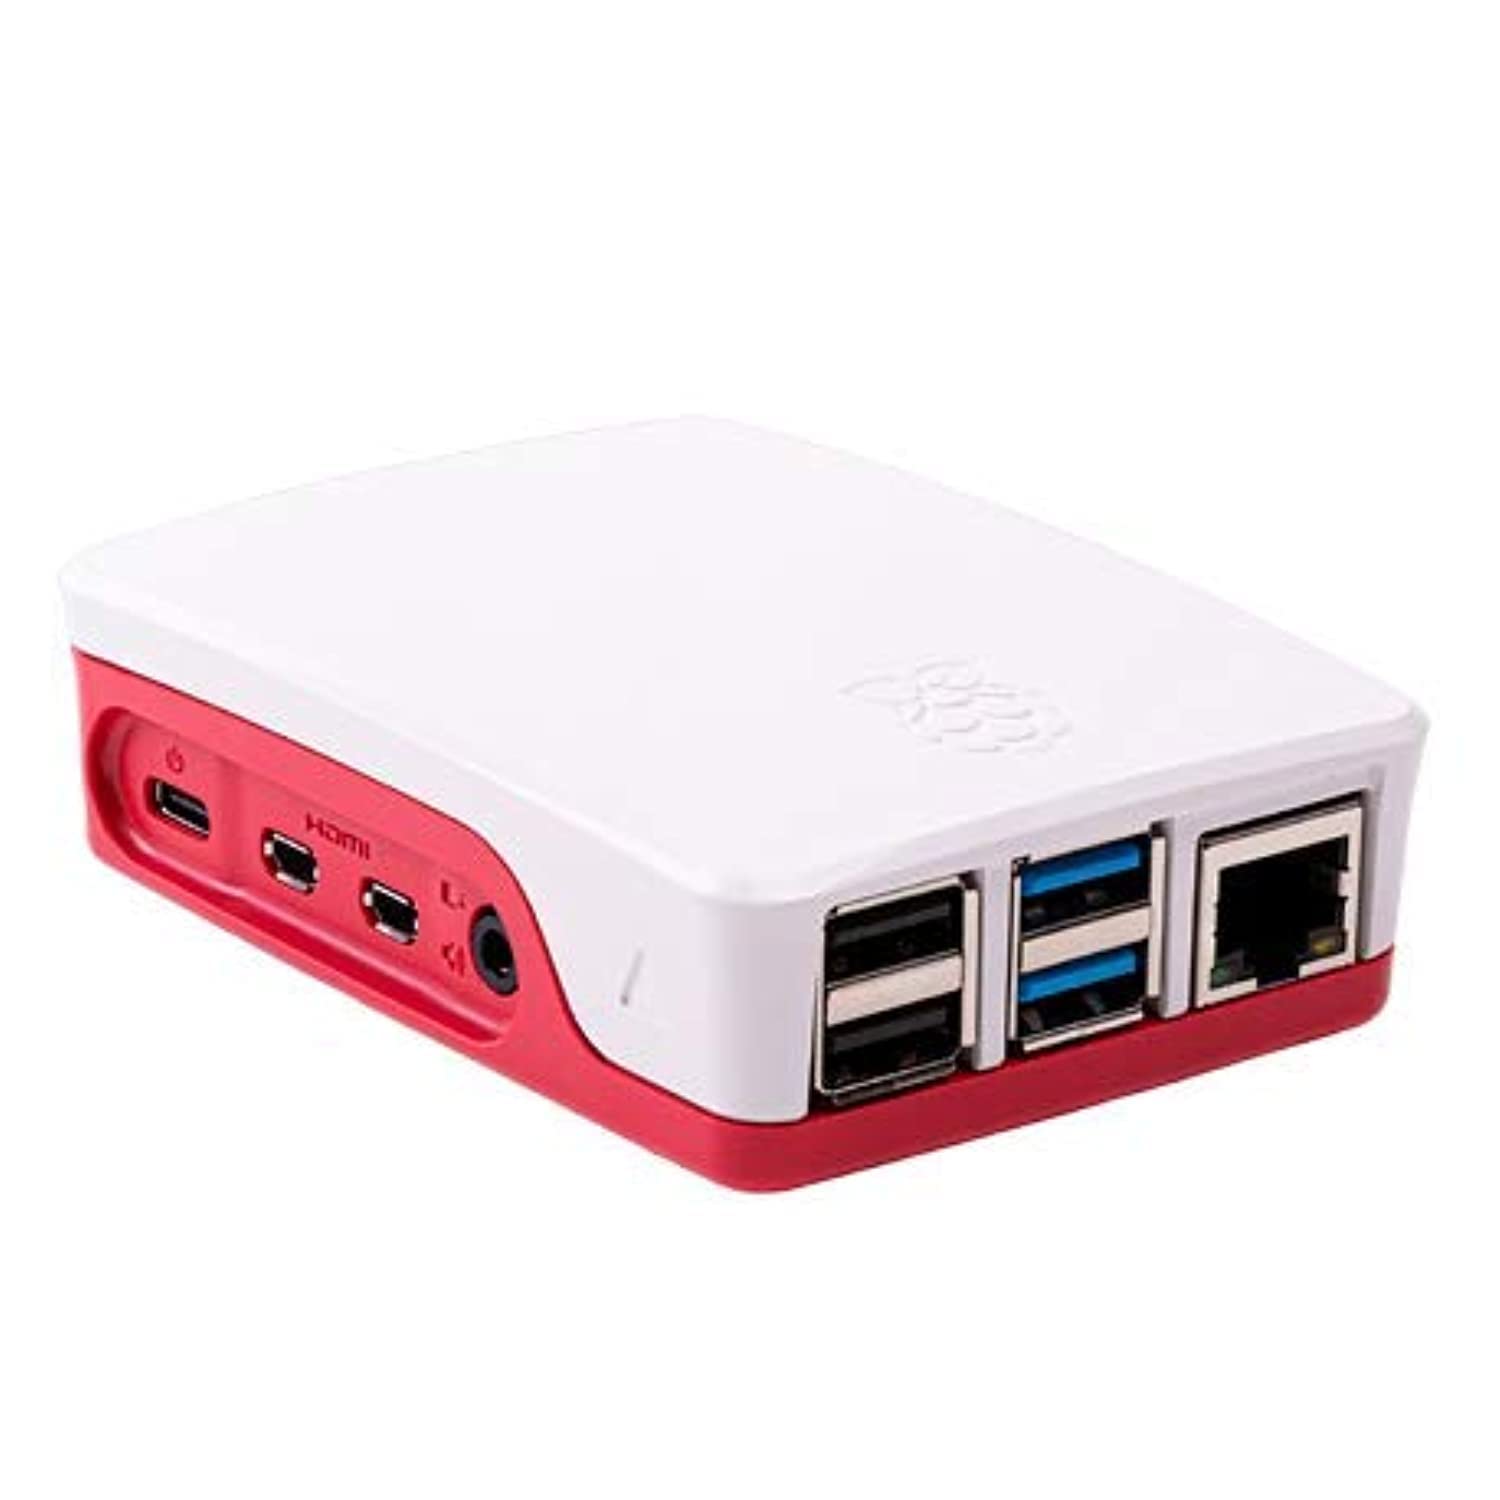 Raspberry Pi 4 Case - Red/White